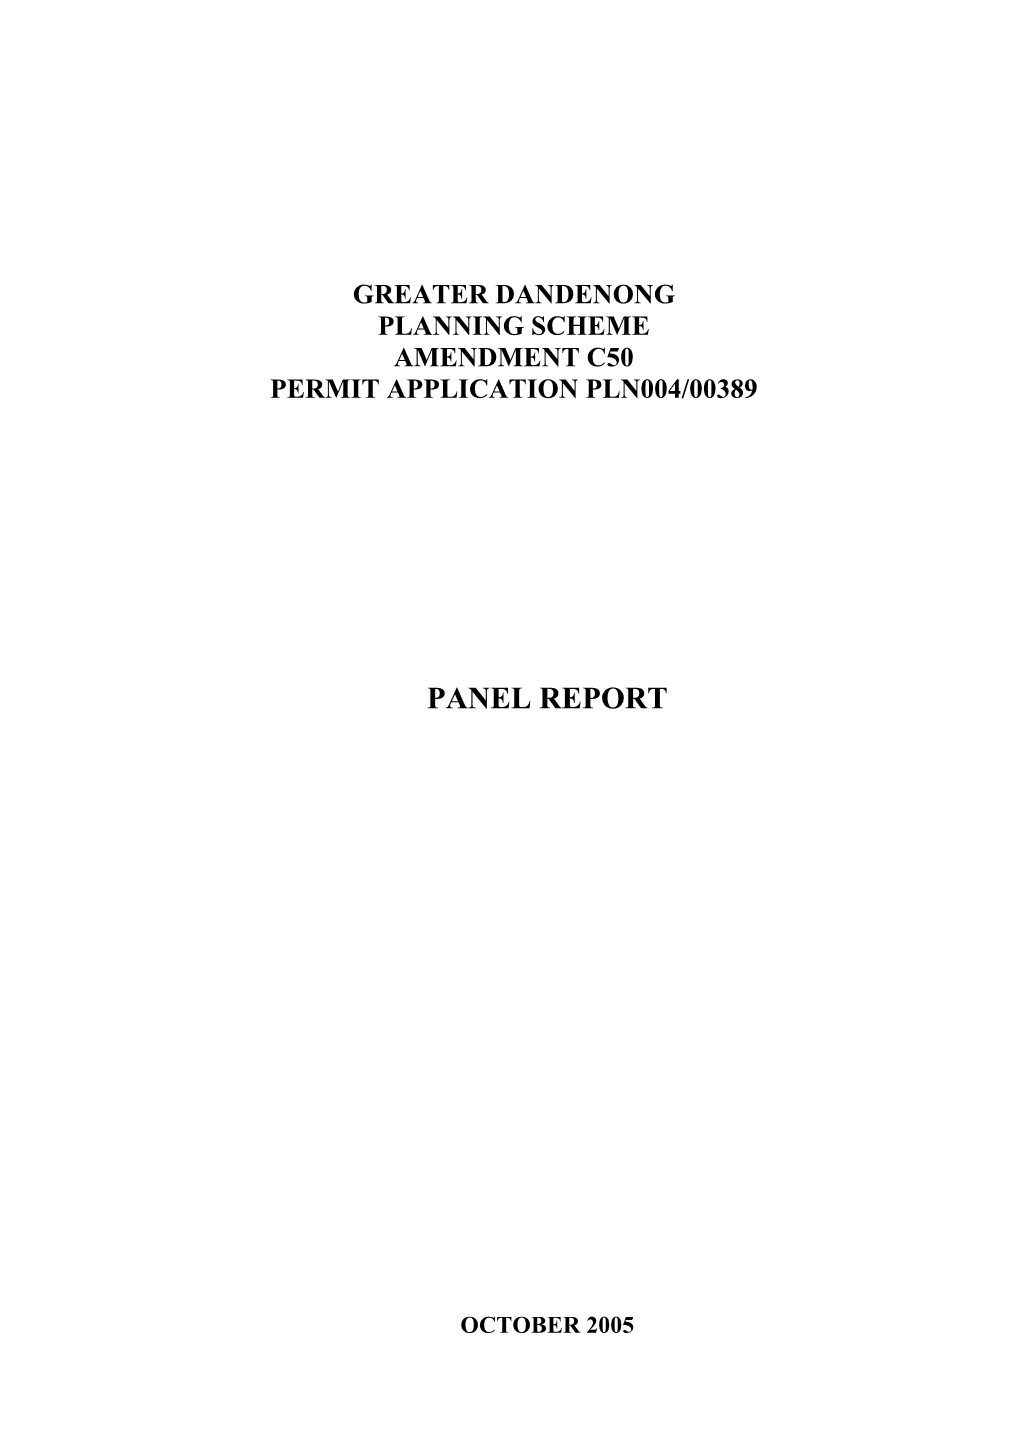 Panel Report